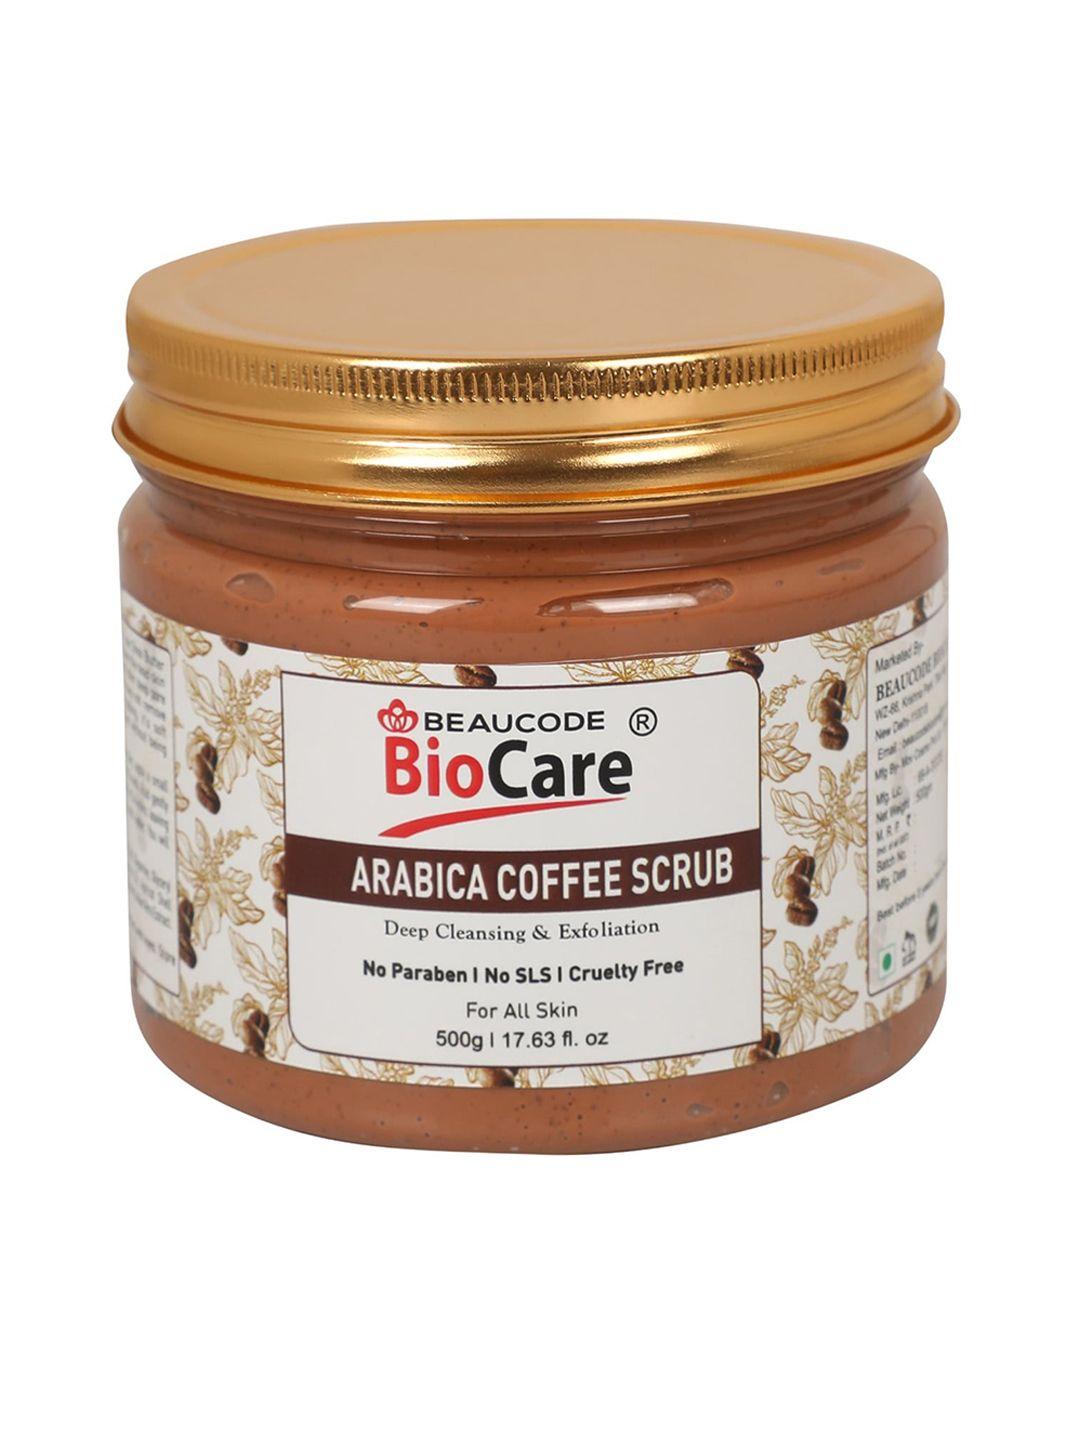 beaucode biocare arabica coffee face scrub for deep cleansing & exfoliation - 500 g